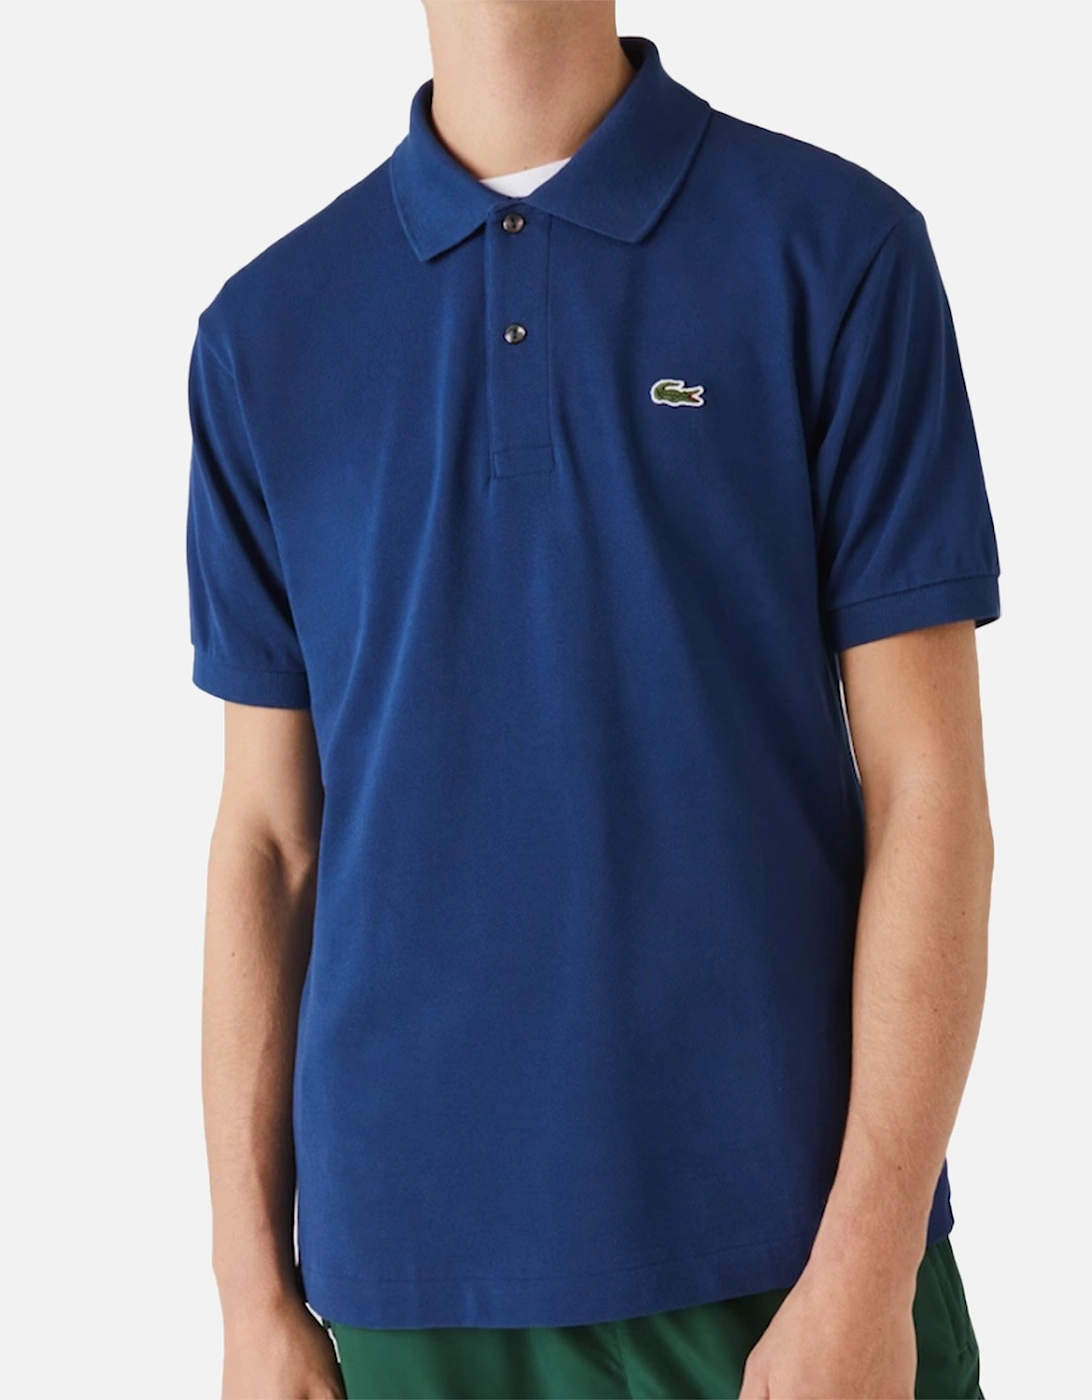 Mens Short Sleeve Polo Shirt (Azure)